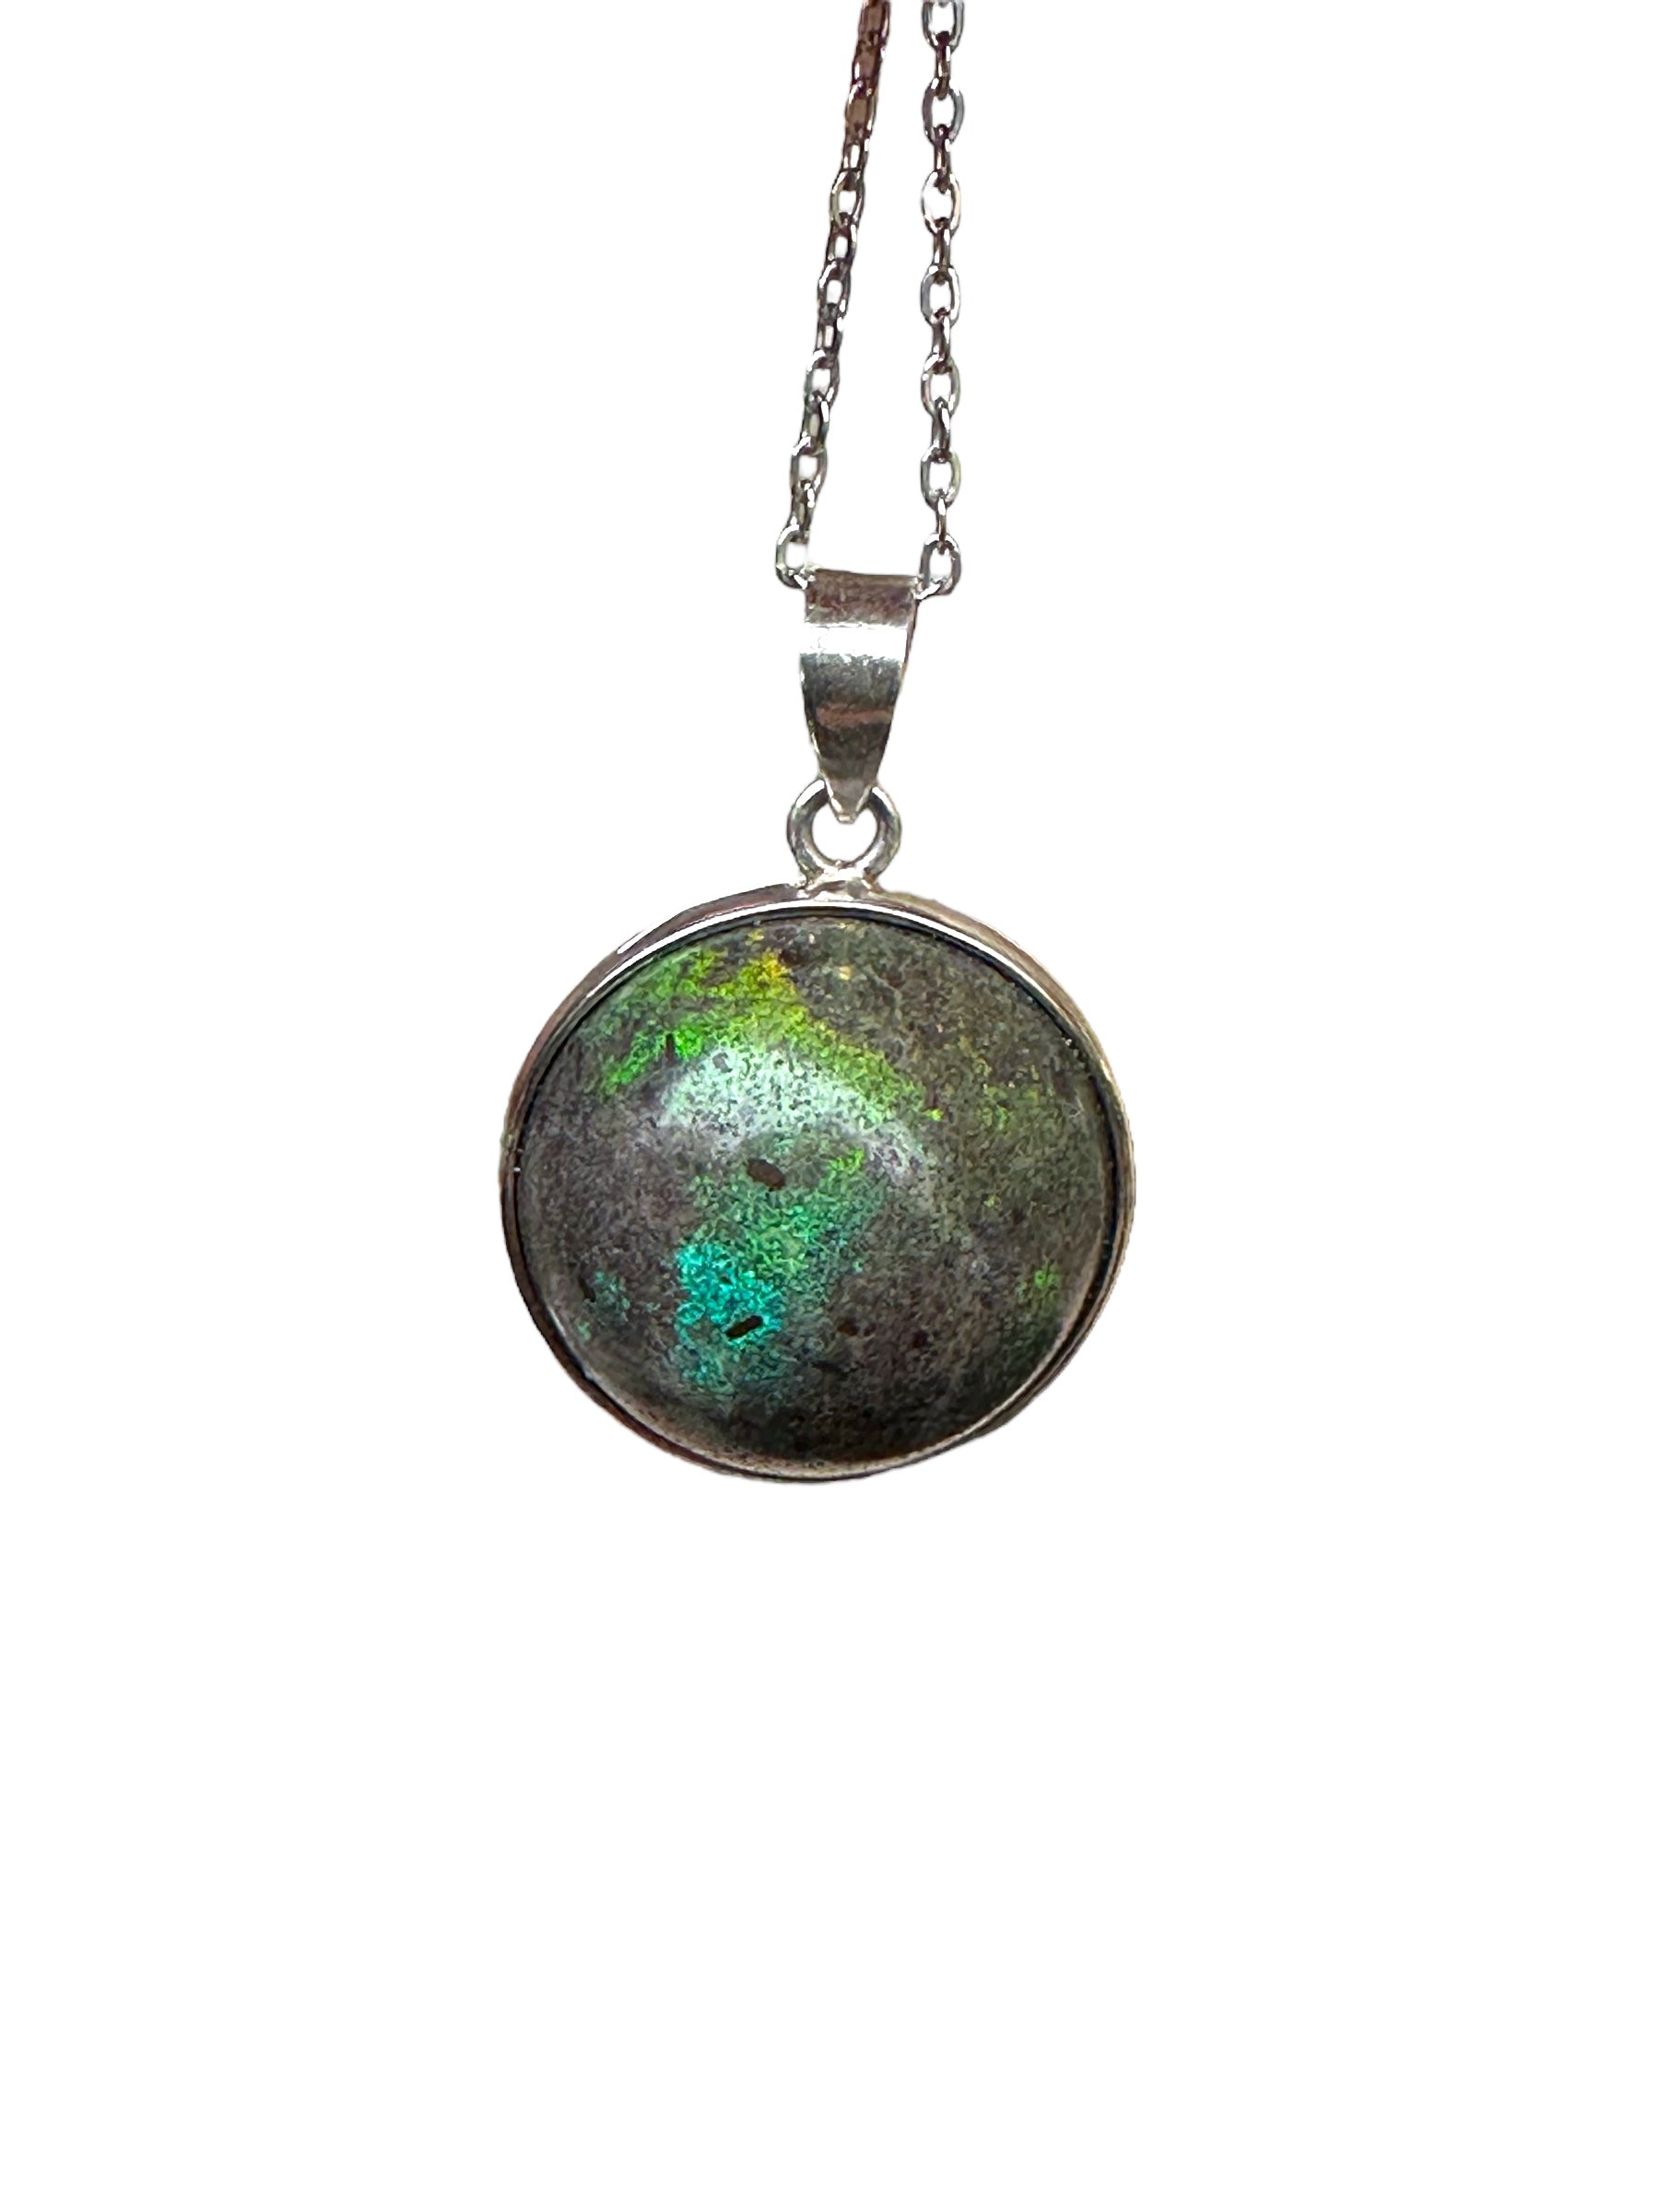 Andamooka opal matrix bead set in sterling silver